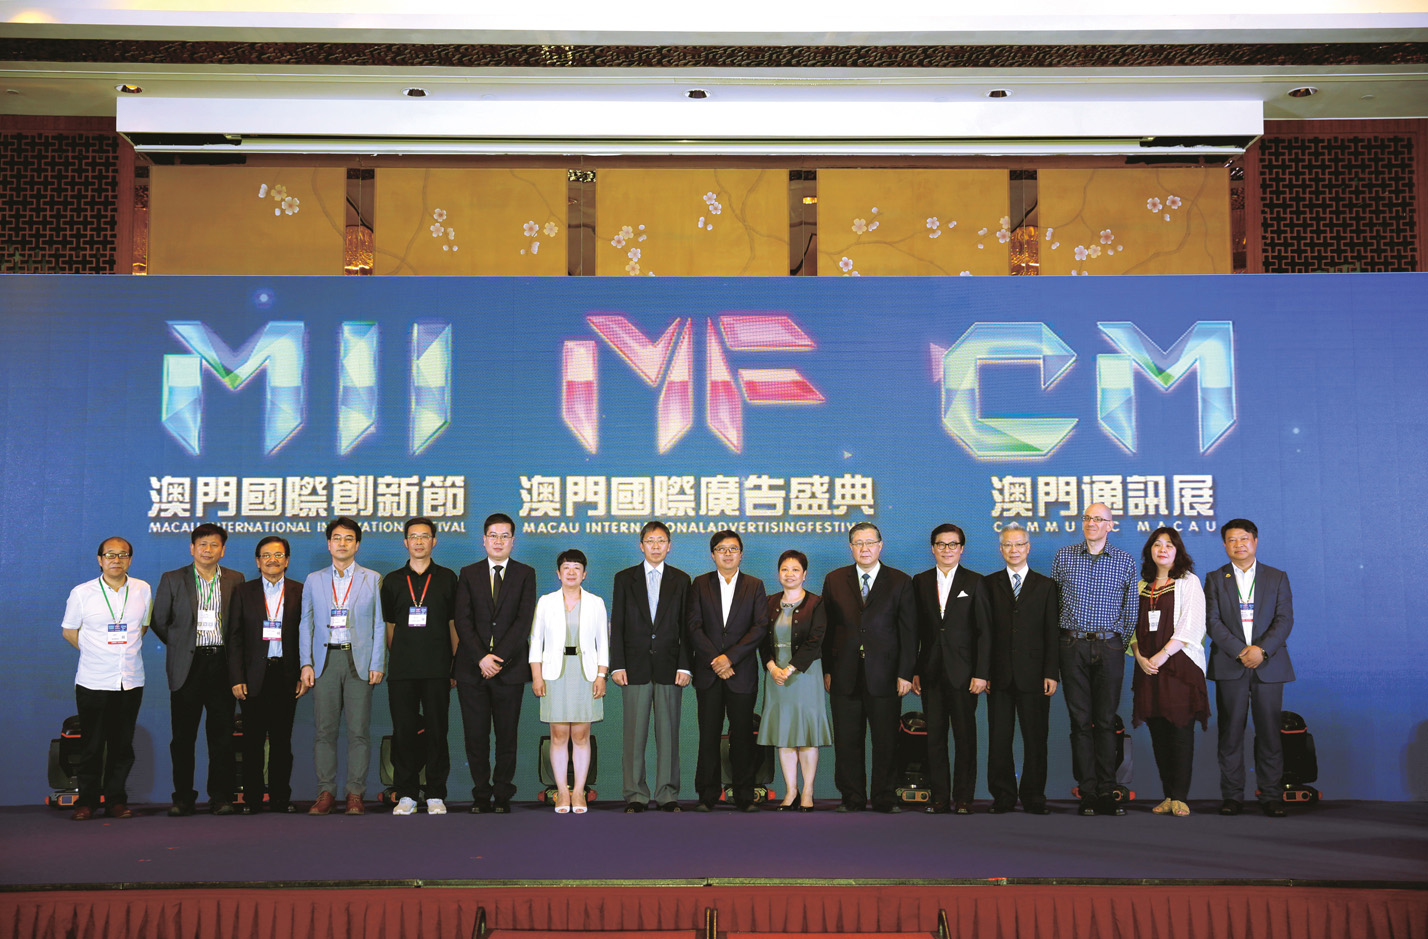 IPIM’s Executive Director Irene V. K. Lau attends the opening ceremony of the Macau International Innovation Festival (5 June 2017)